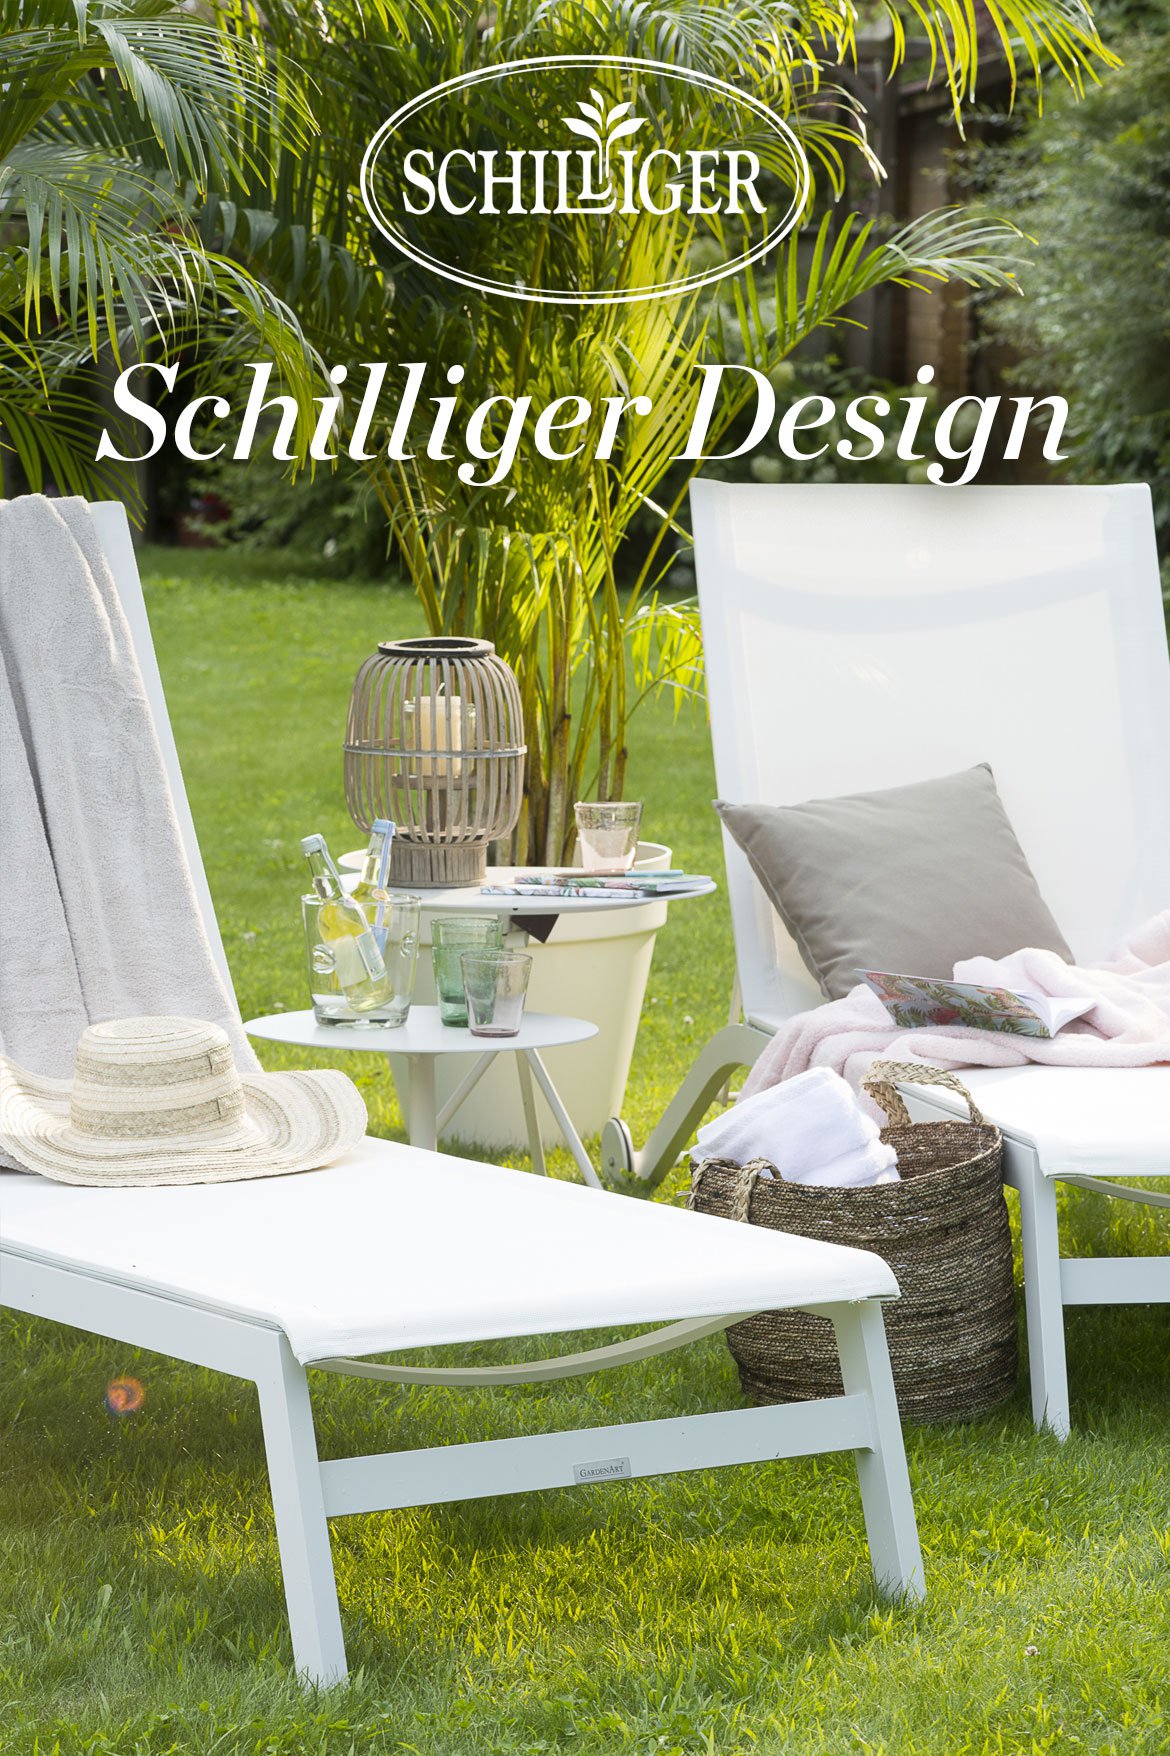 Mobilier de jardin Schilliger Design - meuble de jardin, meuble d'exterieur, design, qualite, confort - Schilliger